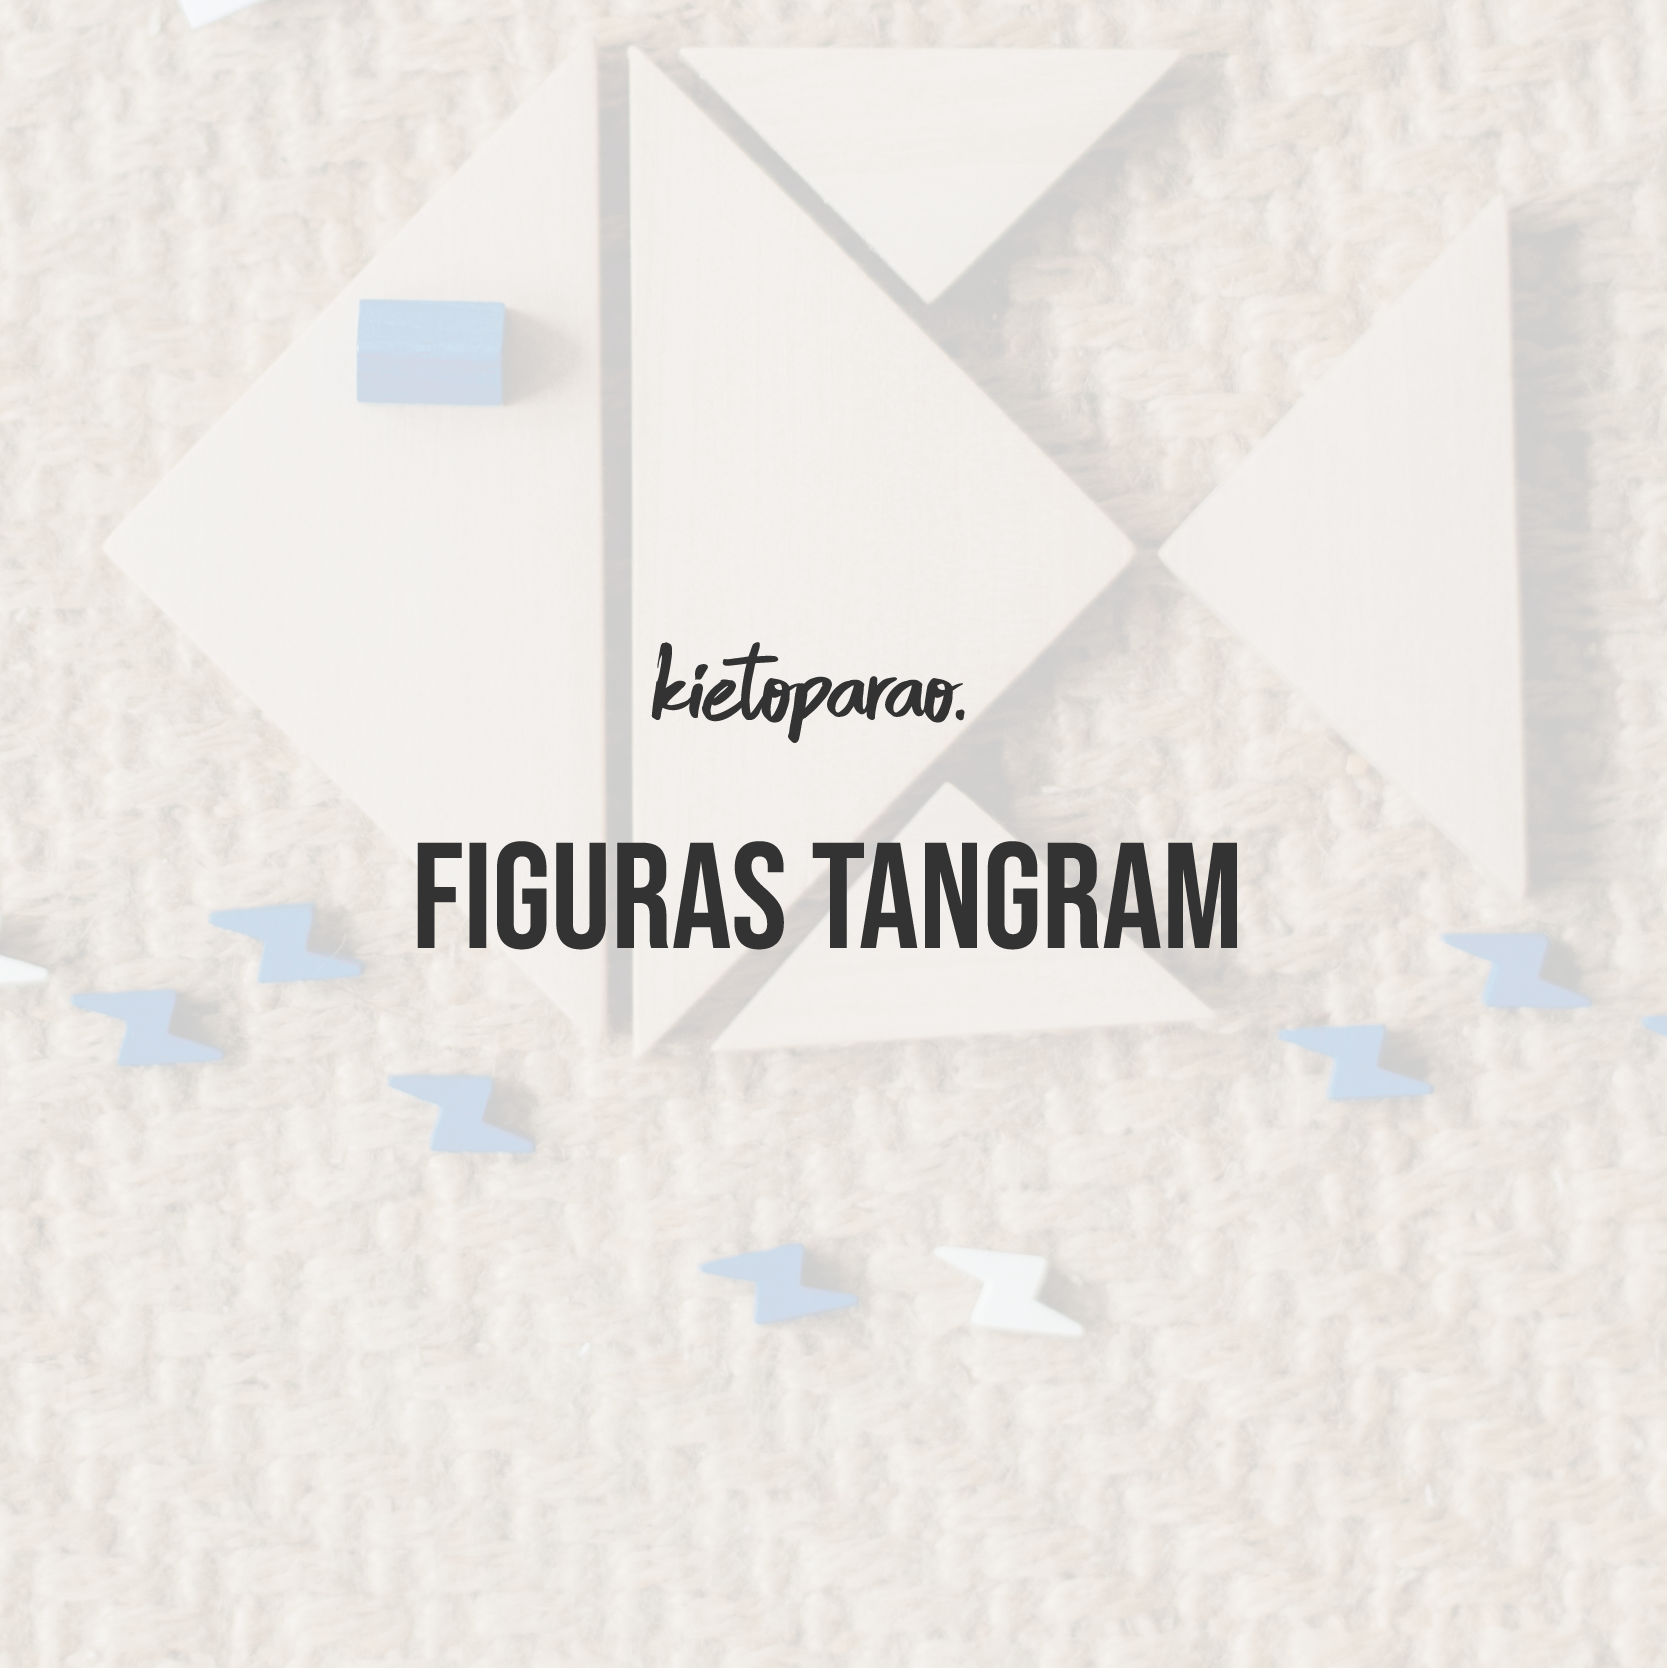 Figura Tangram